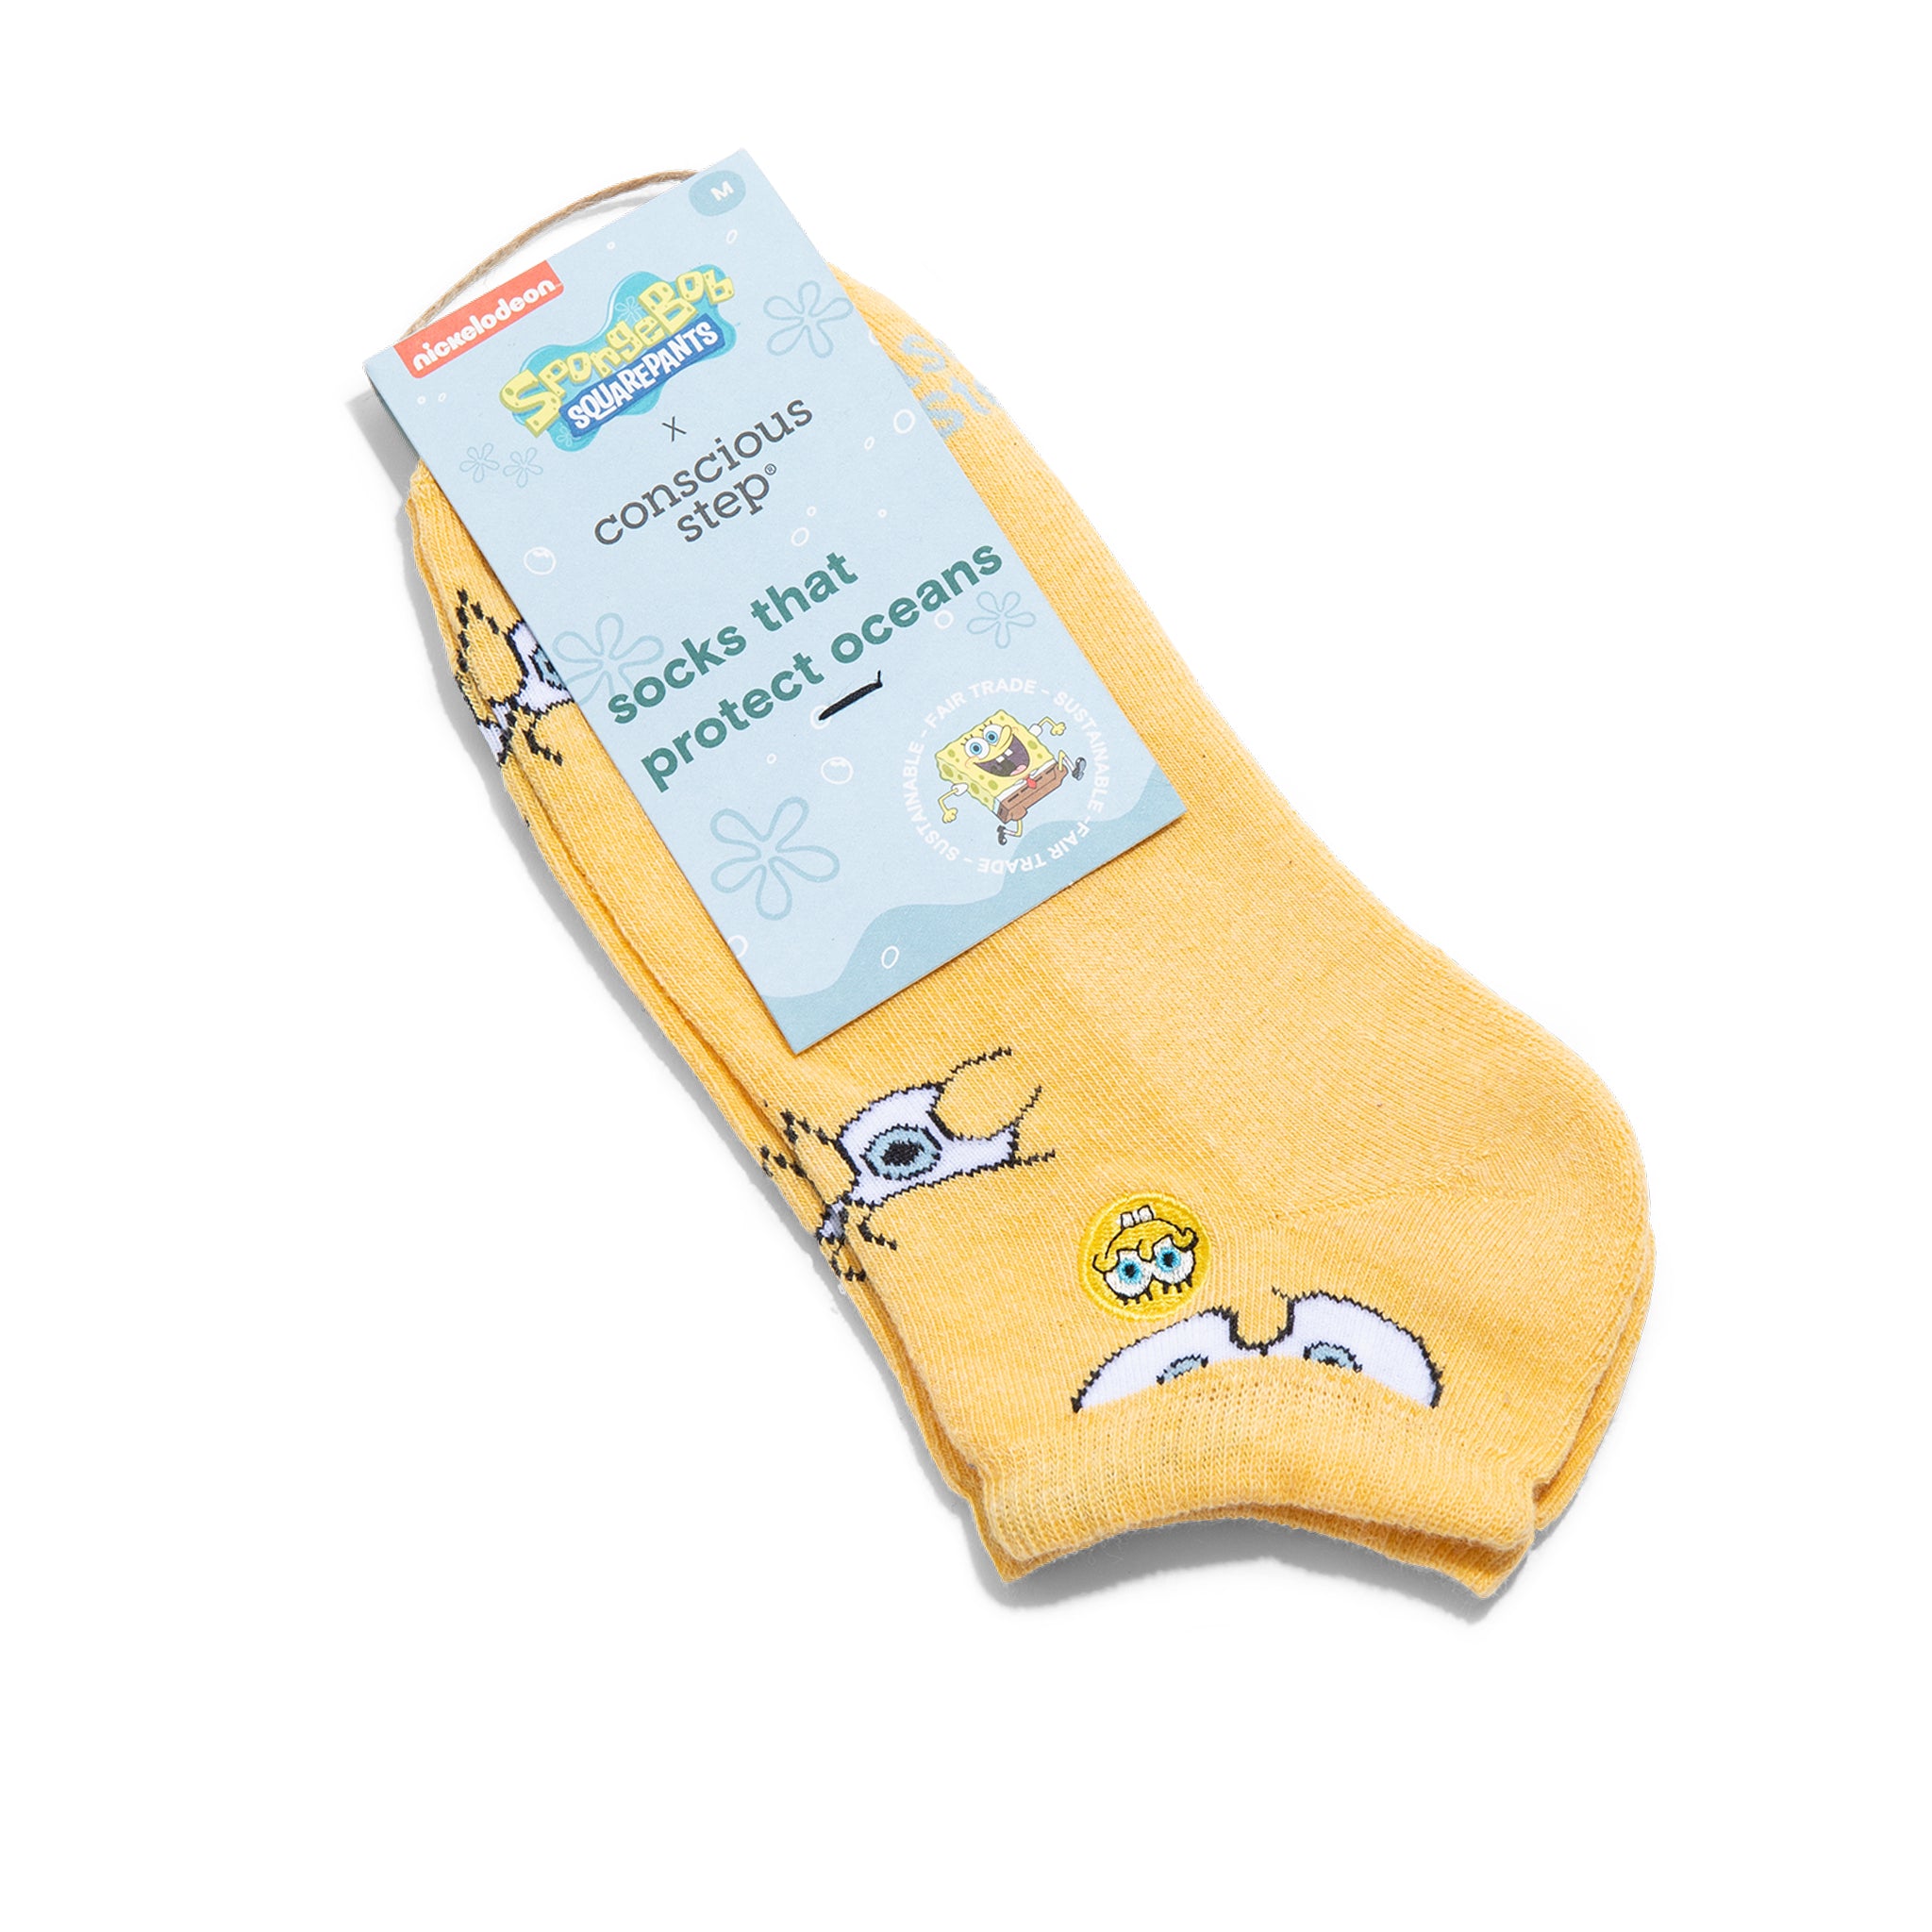 Spongebob Socks that Protect Oceans